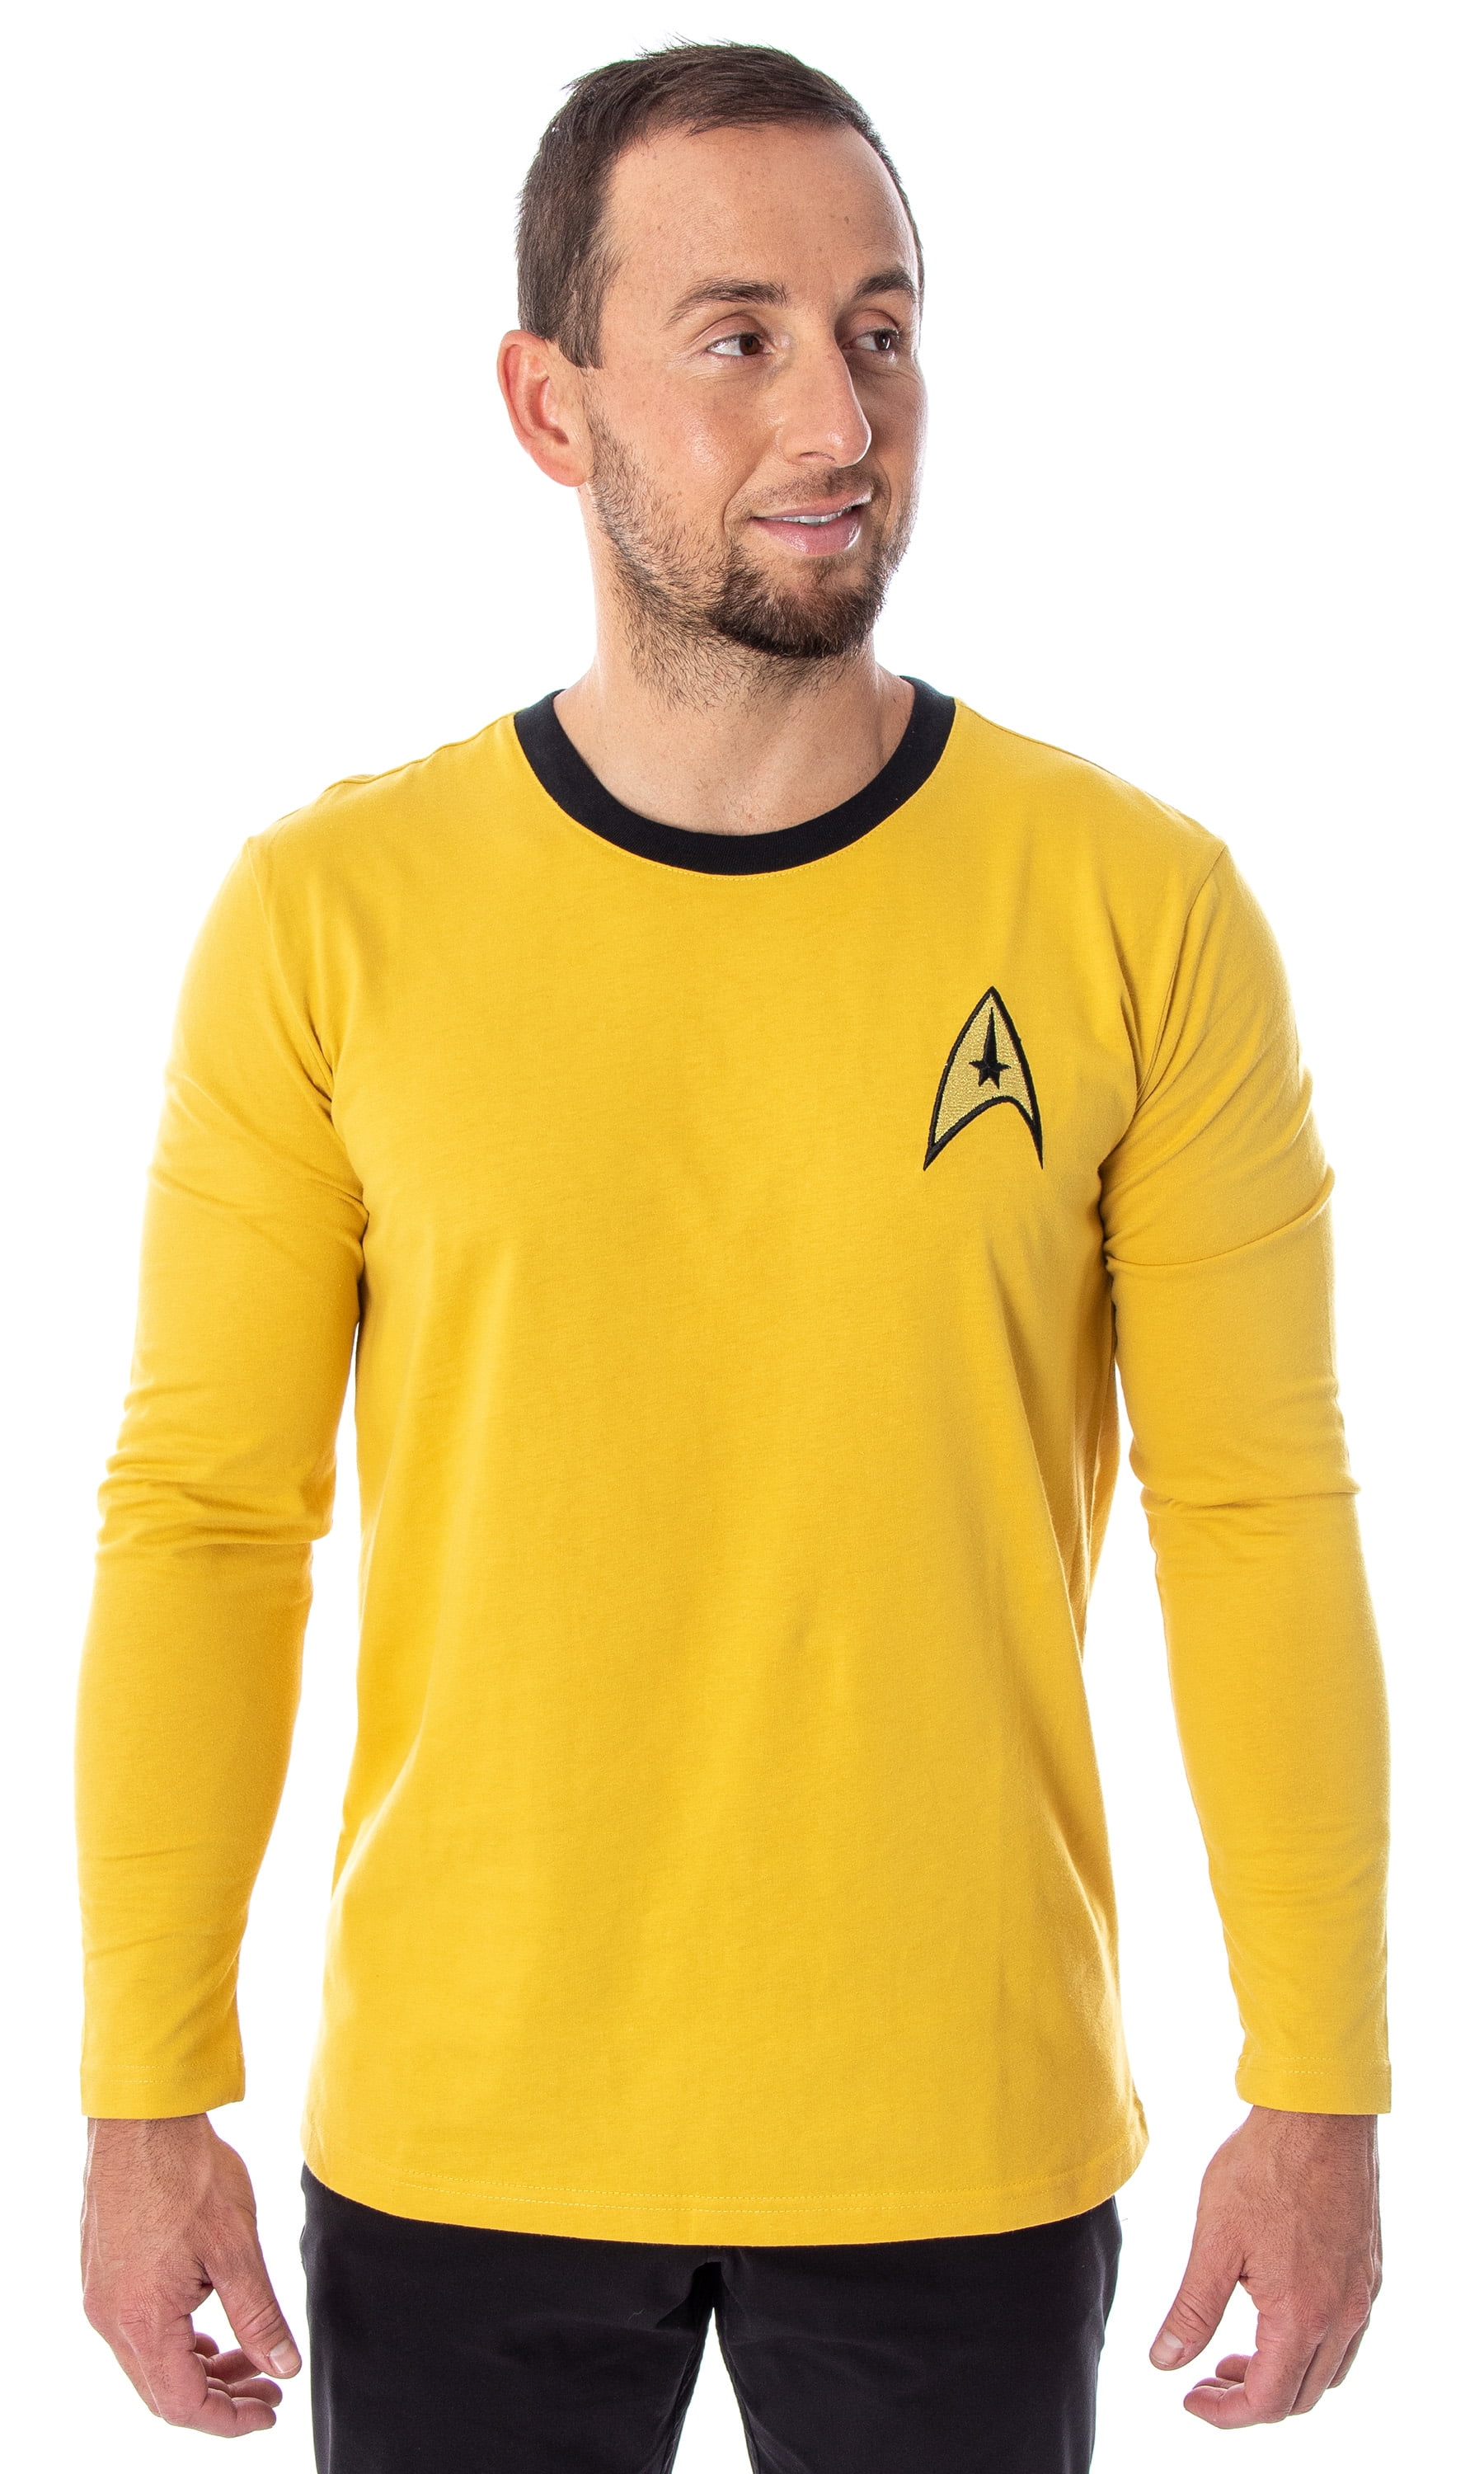 Details about   ST The Original Series Captain Kirk Shirt Uniform Costume Red Blue Yellow Shirts 